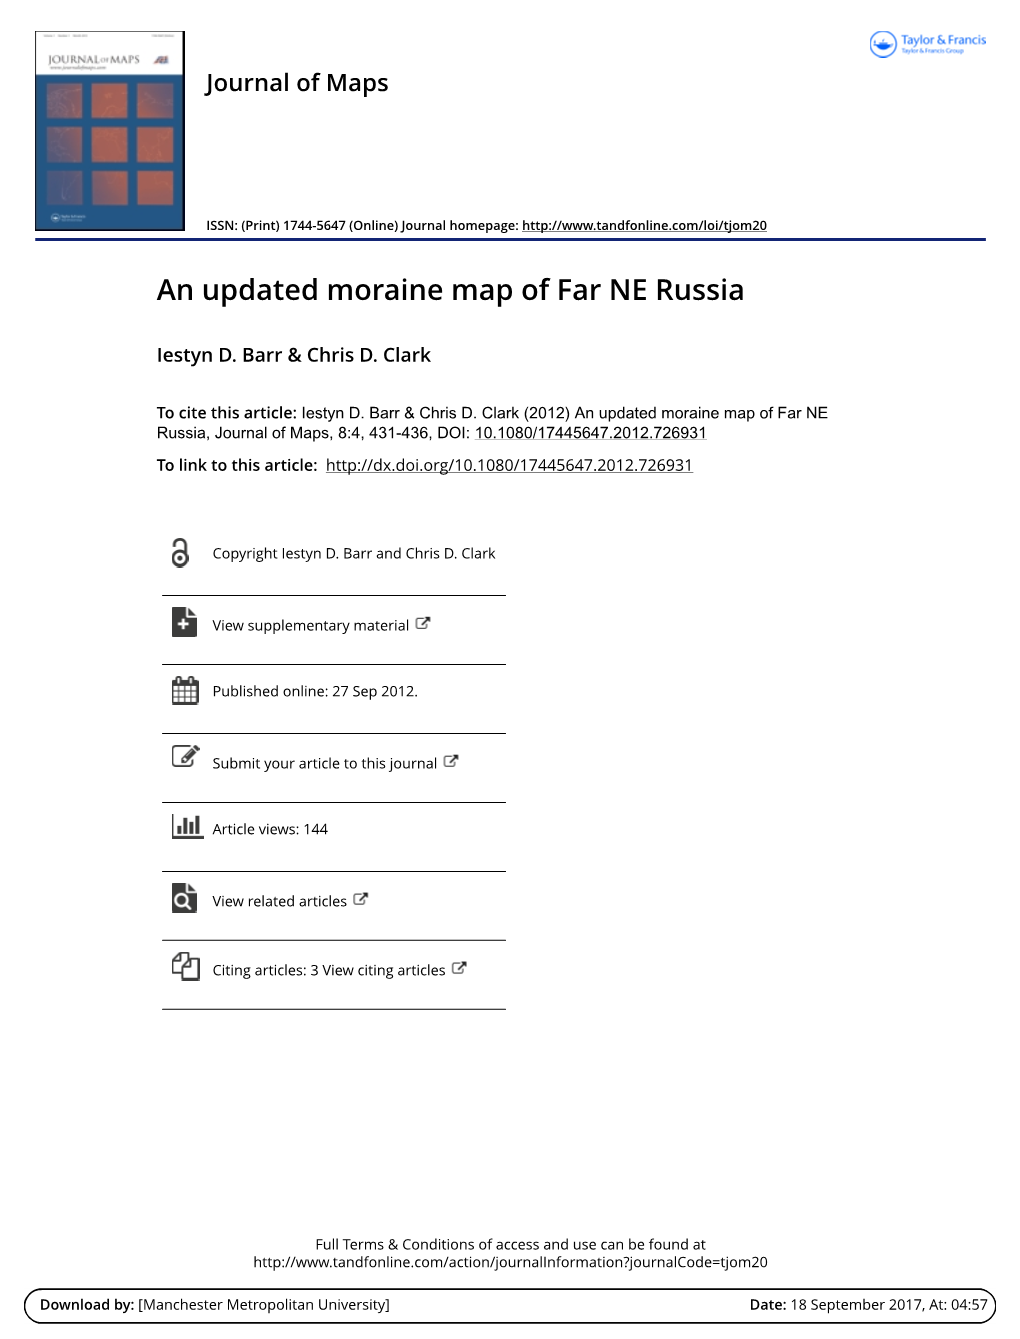 An Updated Moraine Map of Far NE Russia